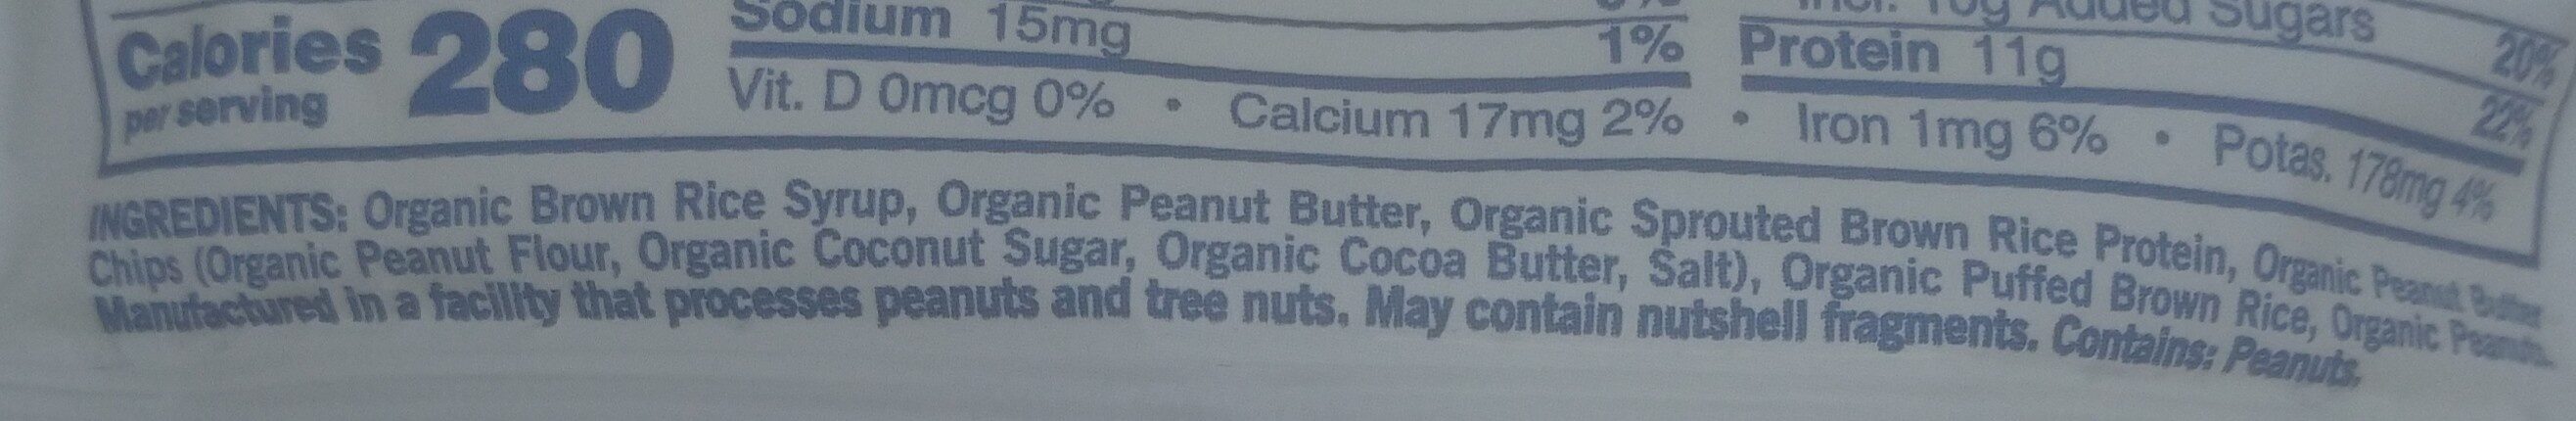 Peanut Butter Protein Replenishment MACROBAR - Ingrediënten - en